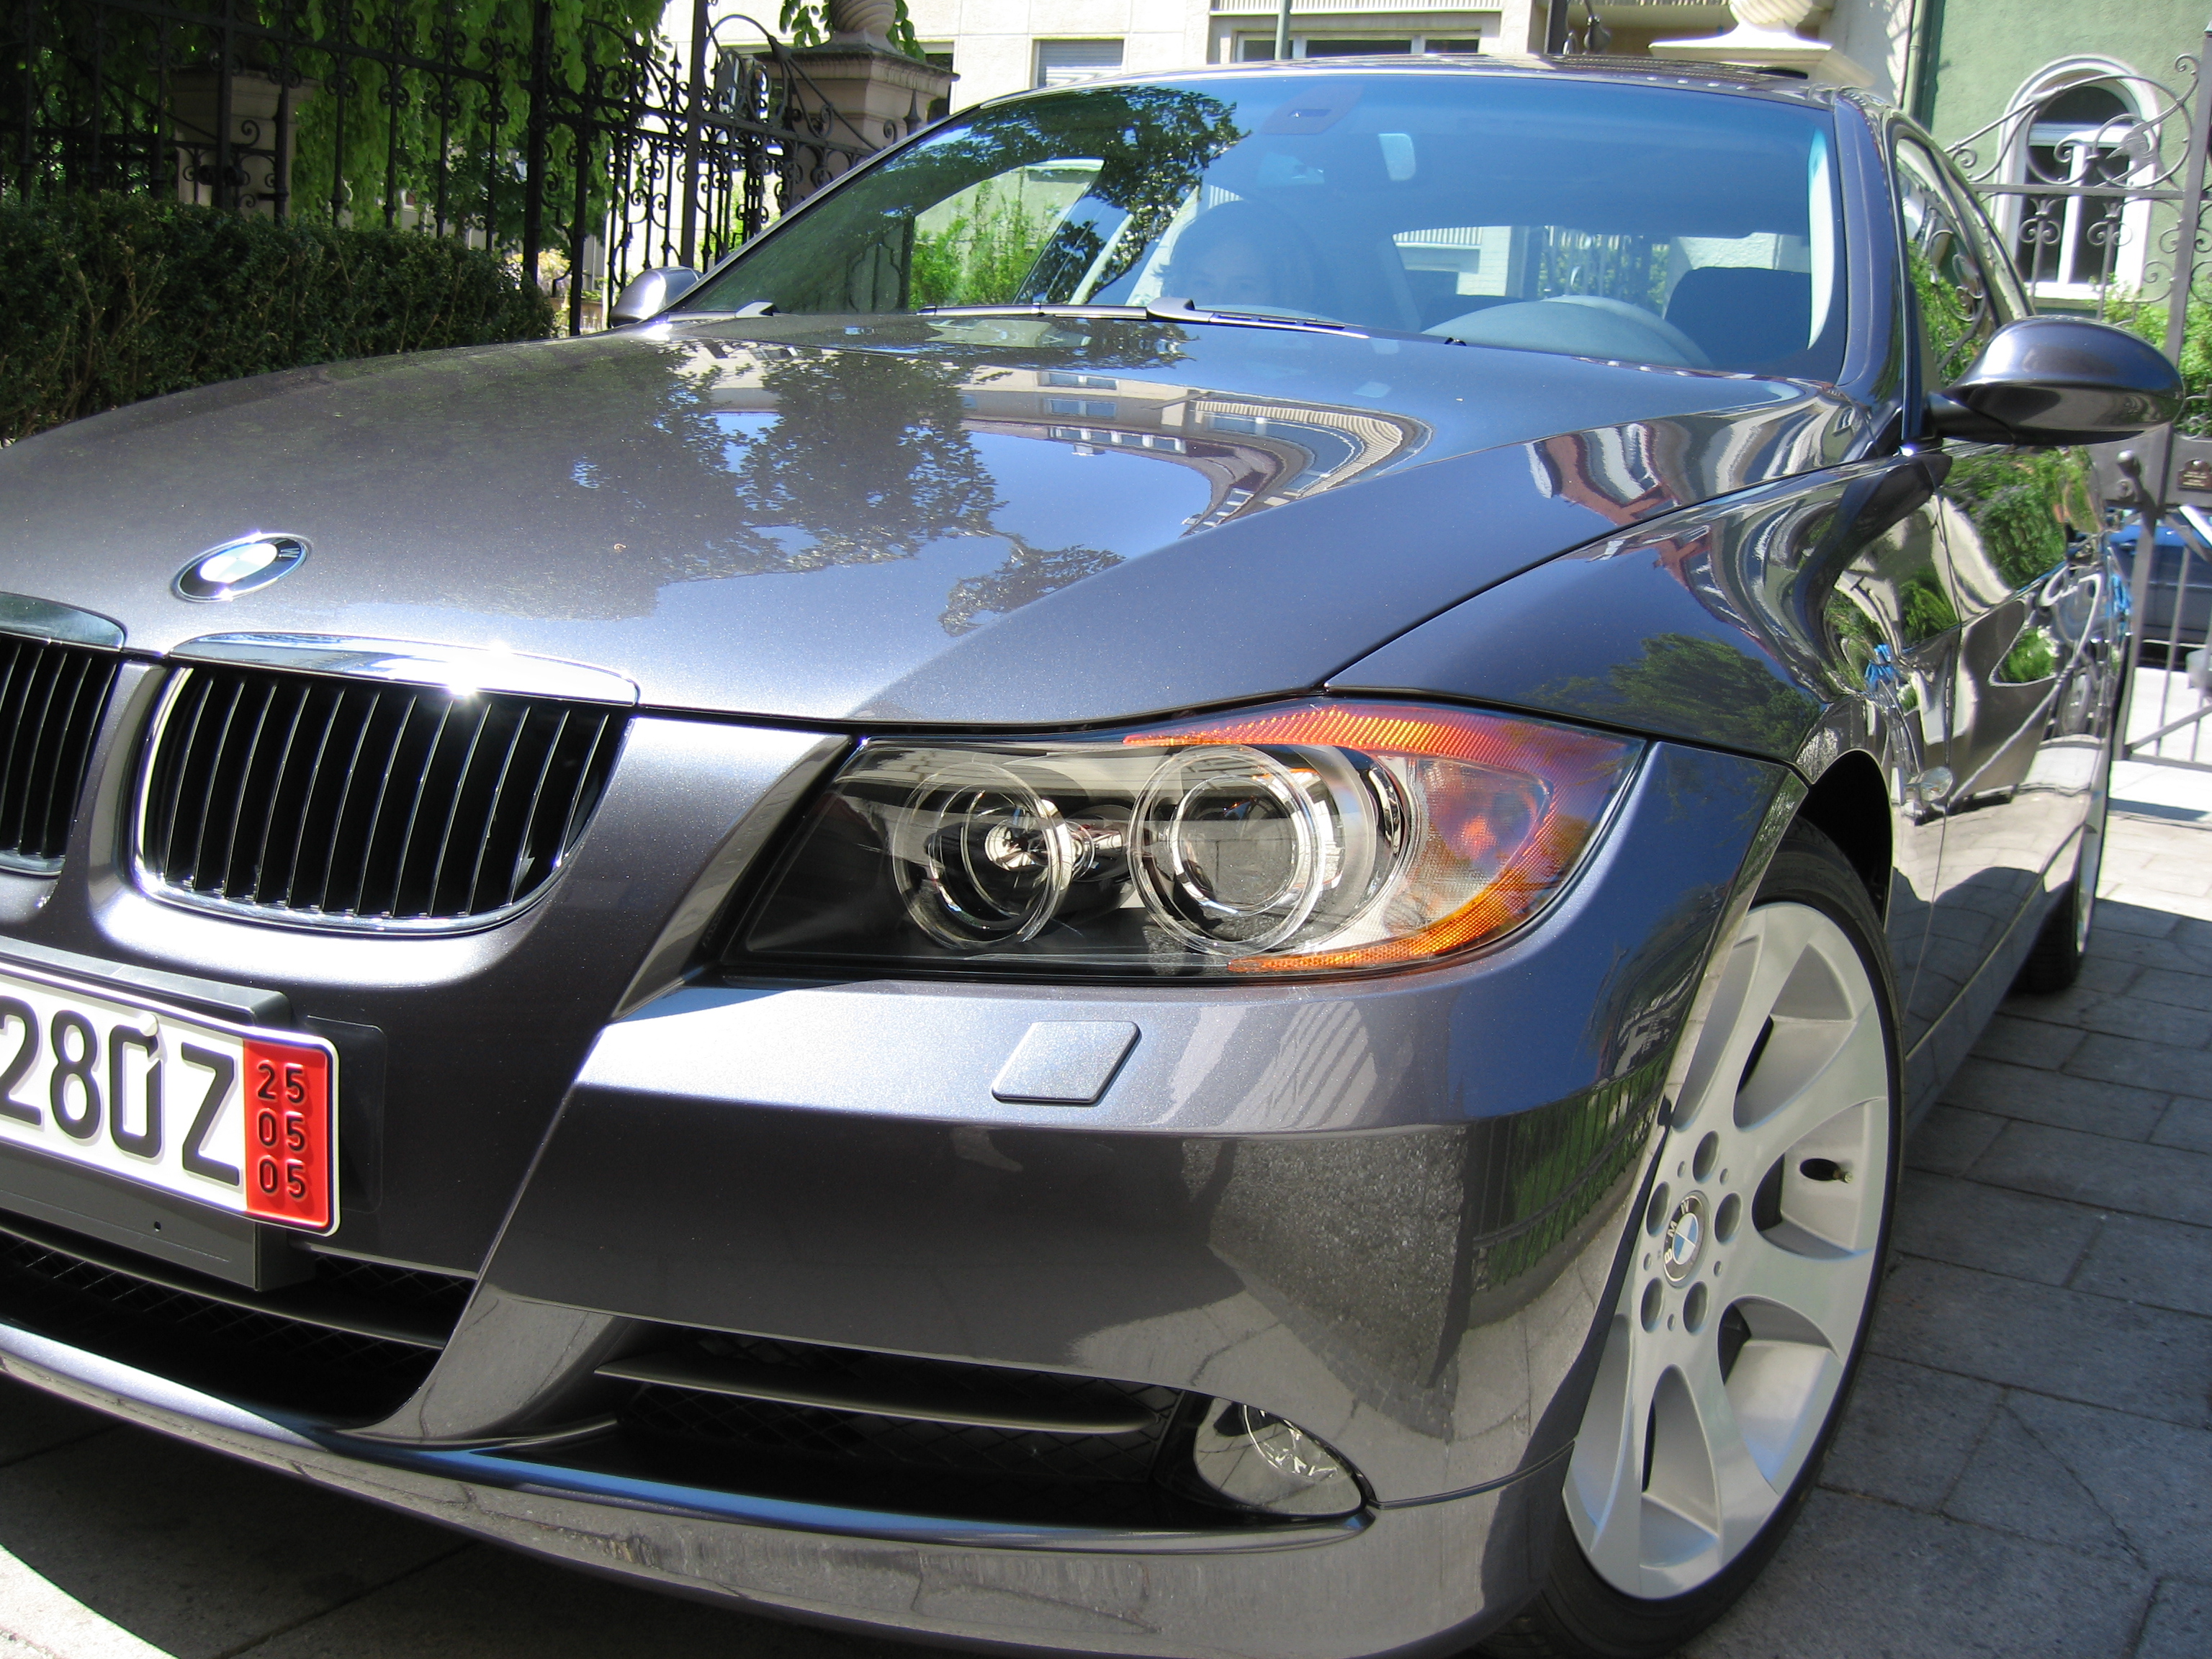 2006 BMW 330i | Flickr - Photo Sharing!